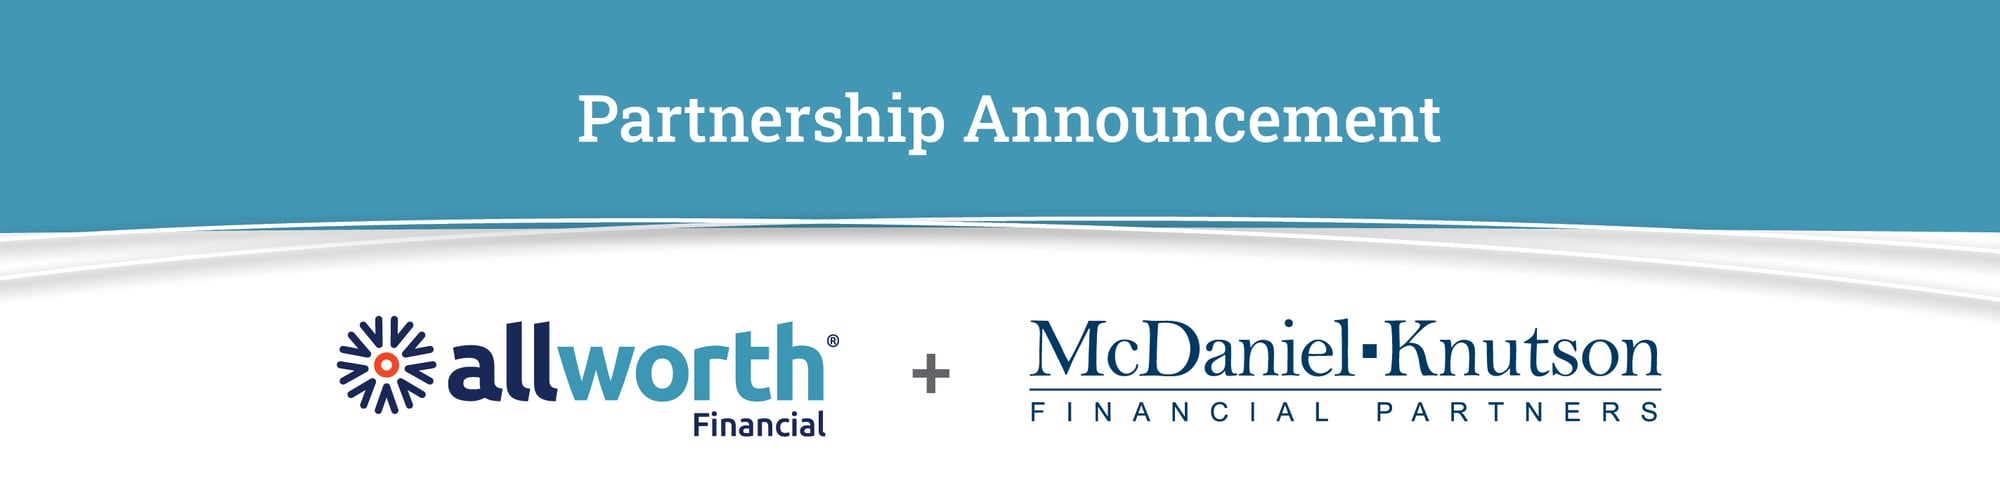 partnership announcement allworth financial and mcdaniel knutson